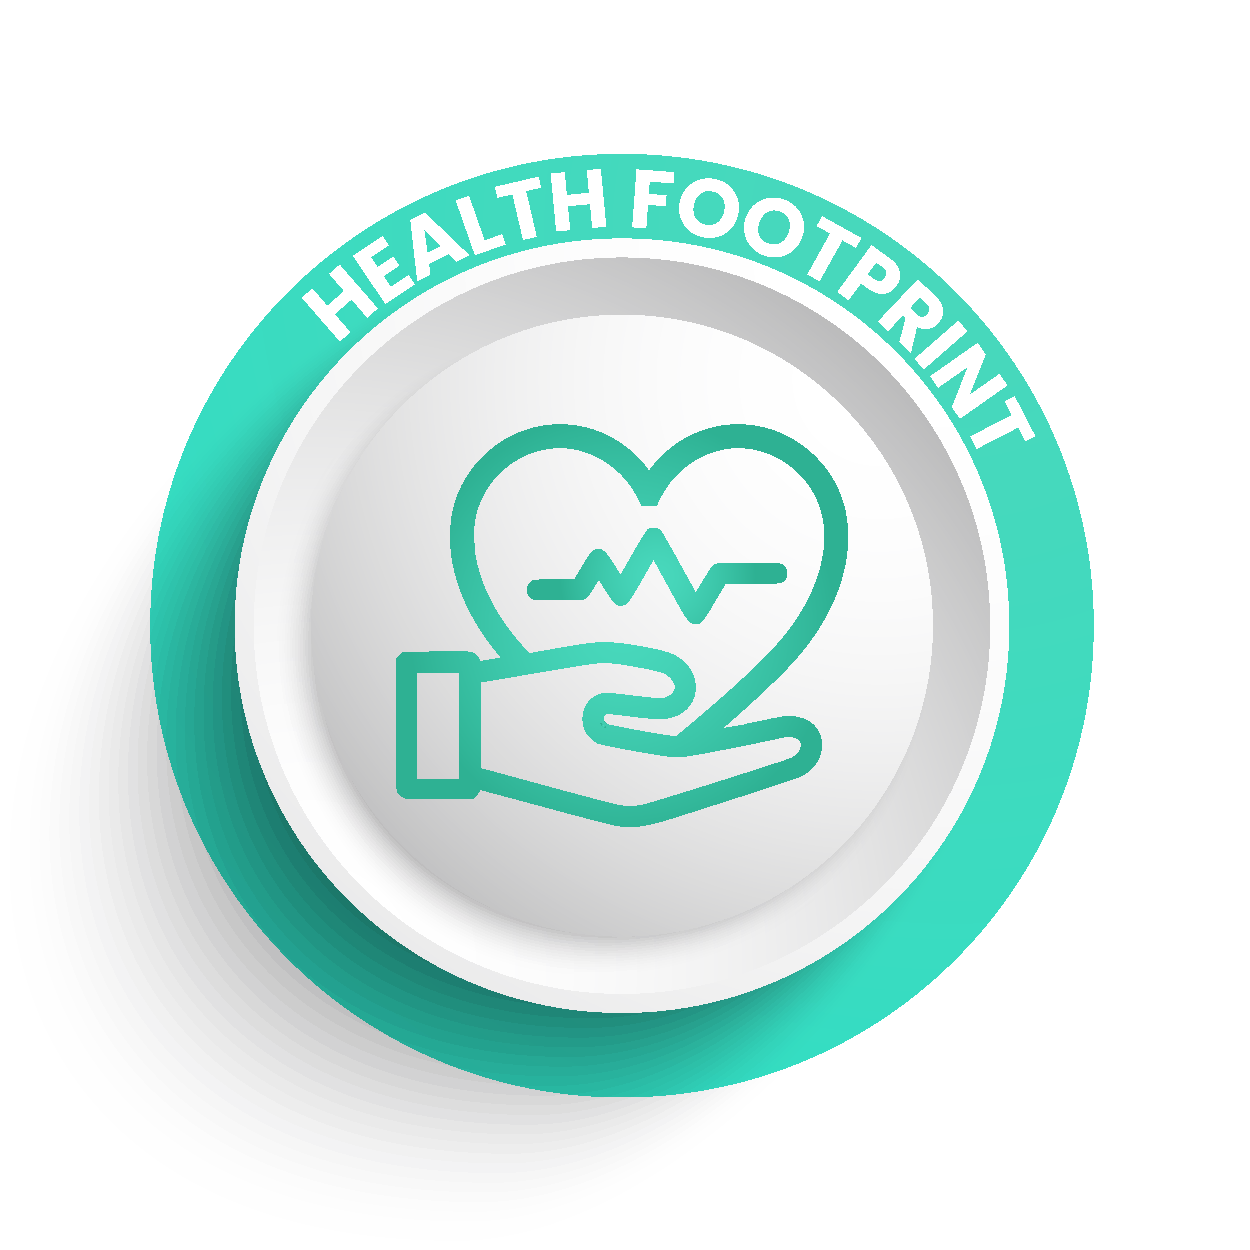 Health Footprint